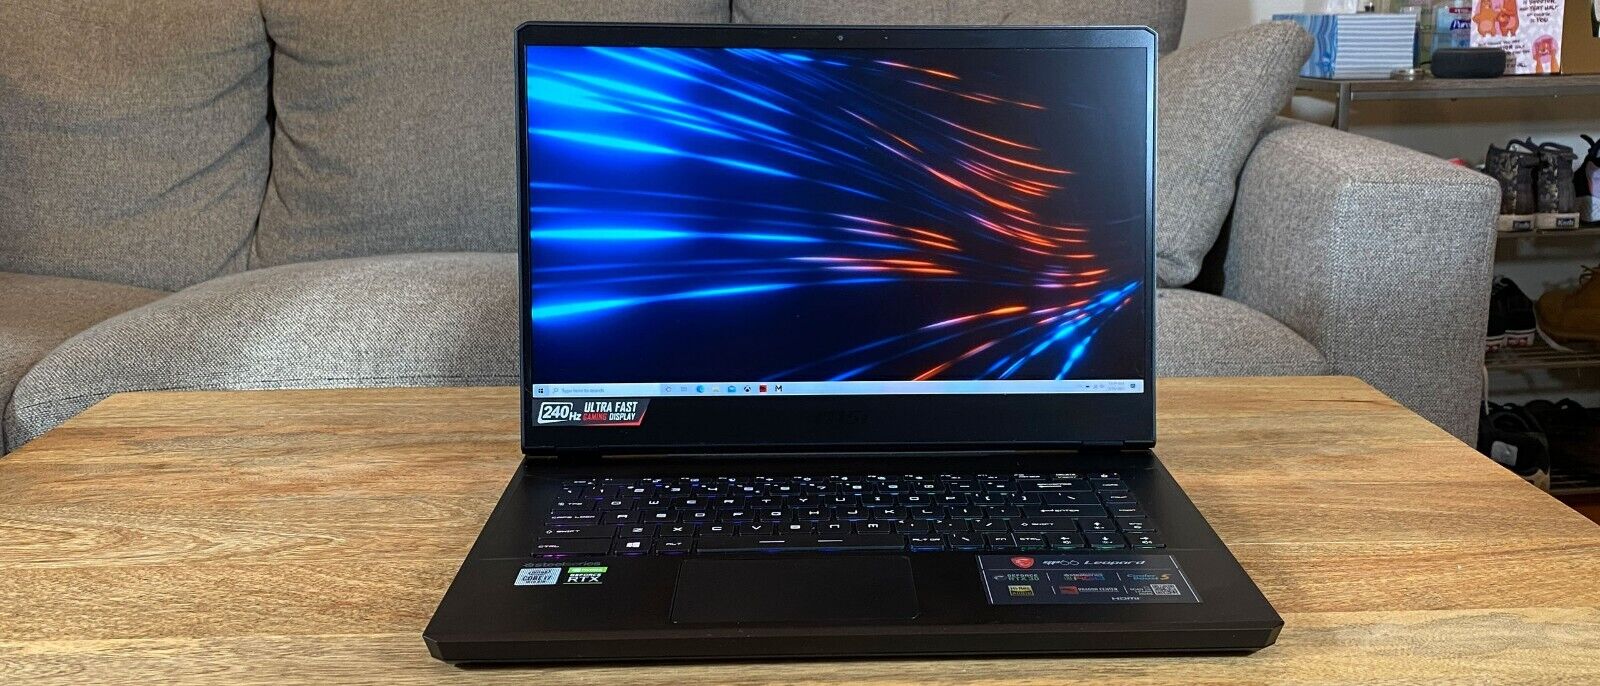 MSI GP66 Leopard Intel i7-11800H 2.30GHz 16GB 1TB 240Hz Gaming Laptop RTX 3080